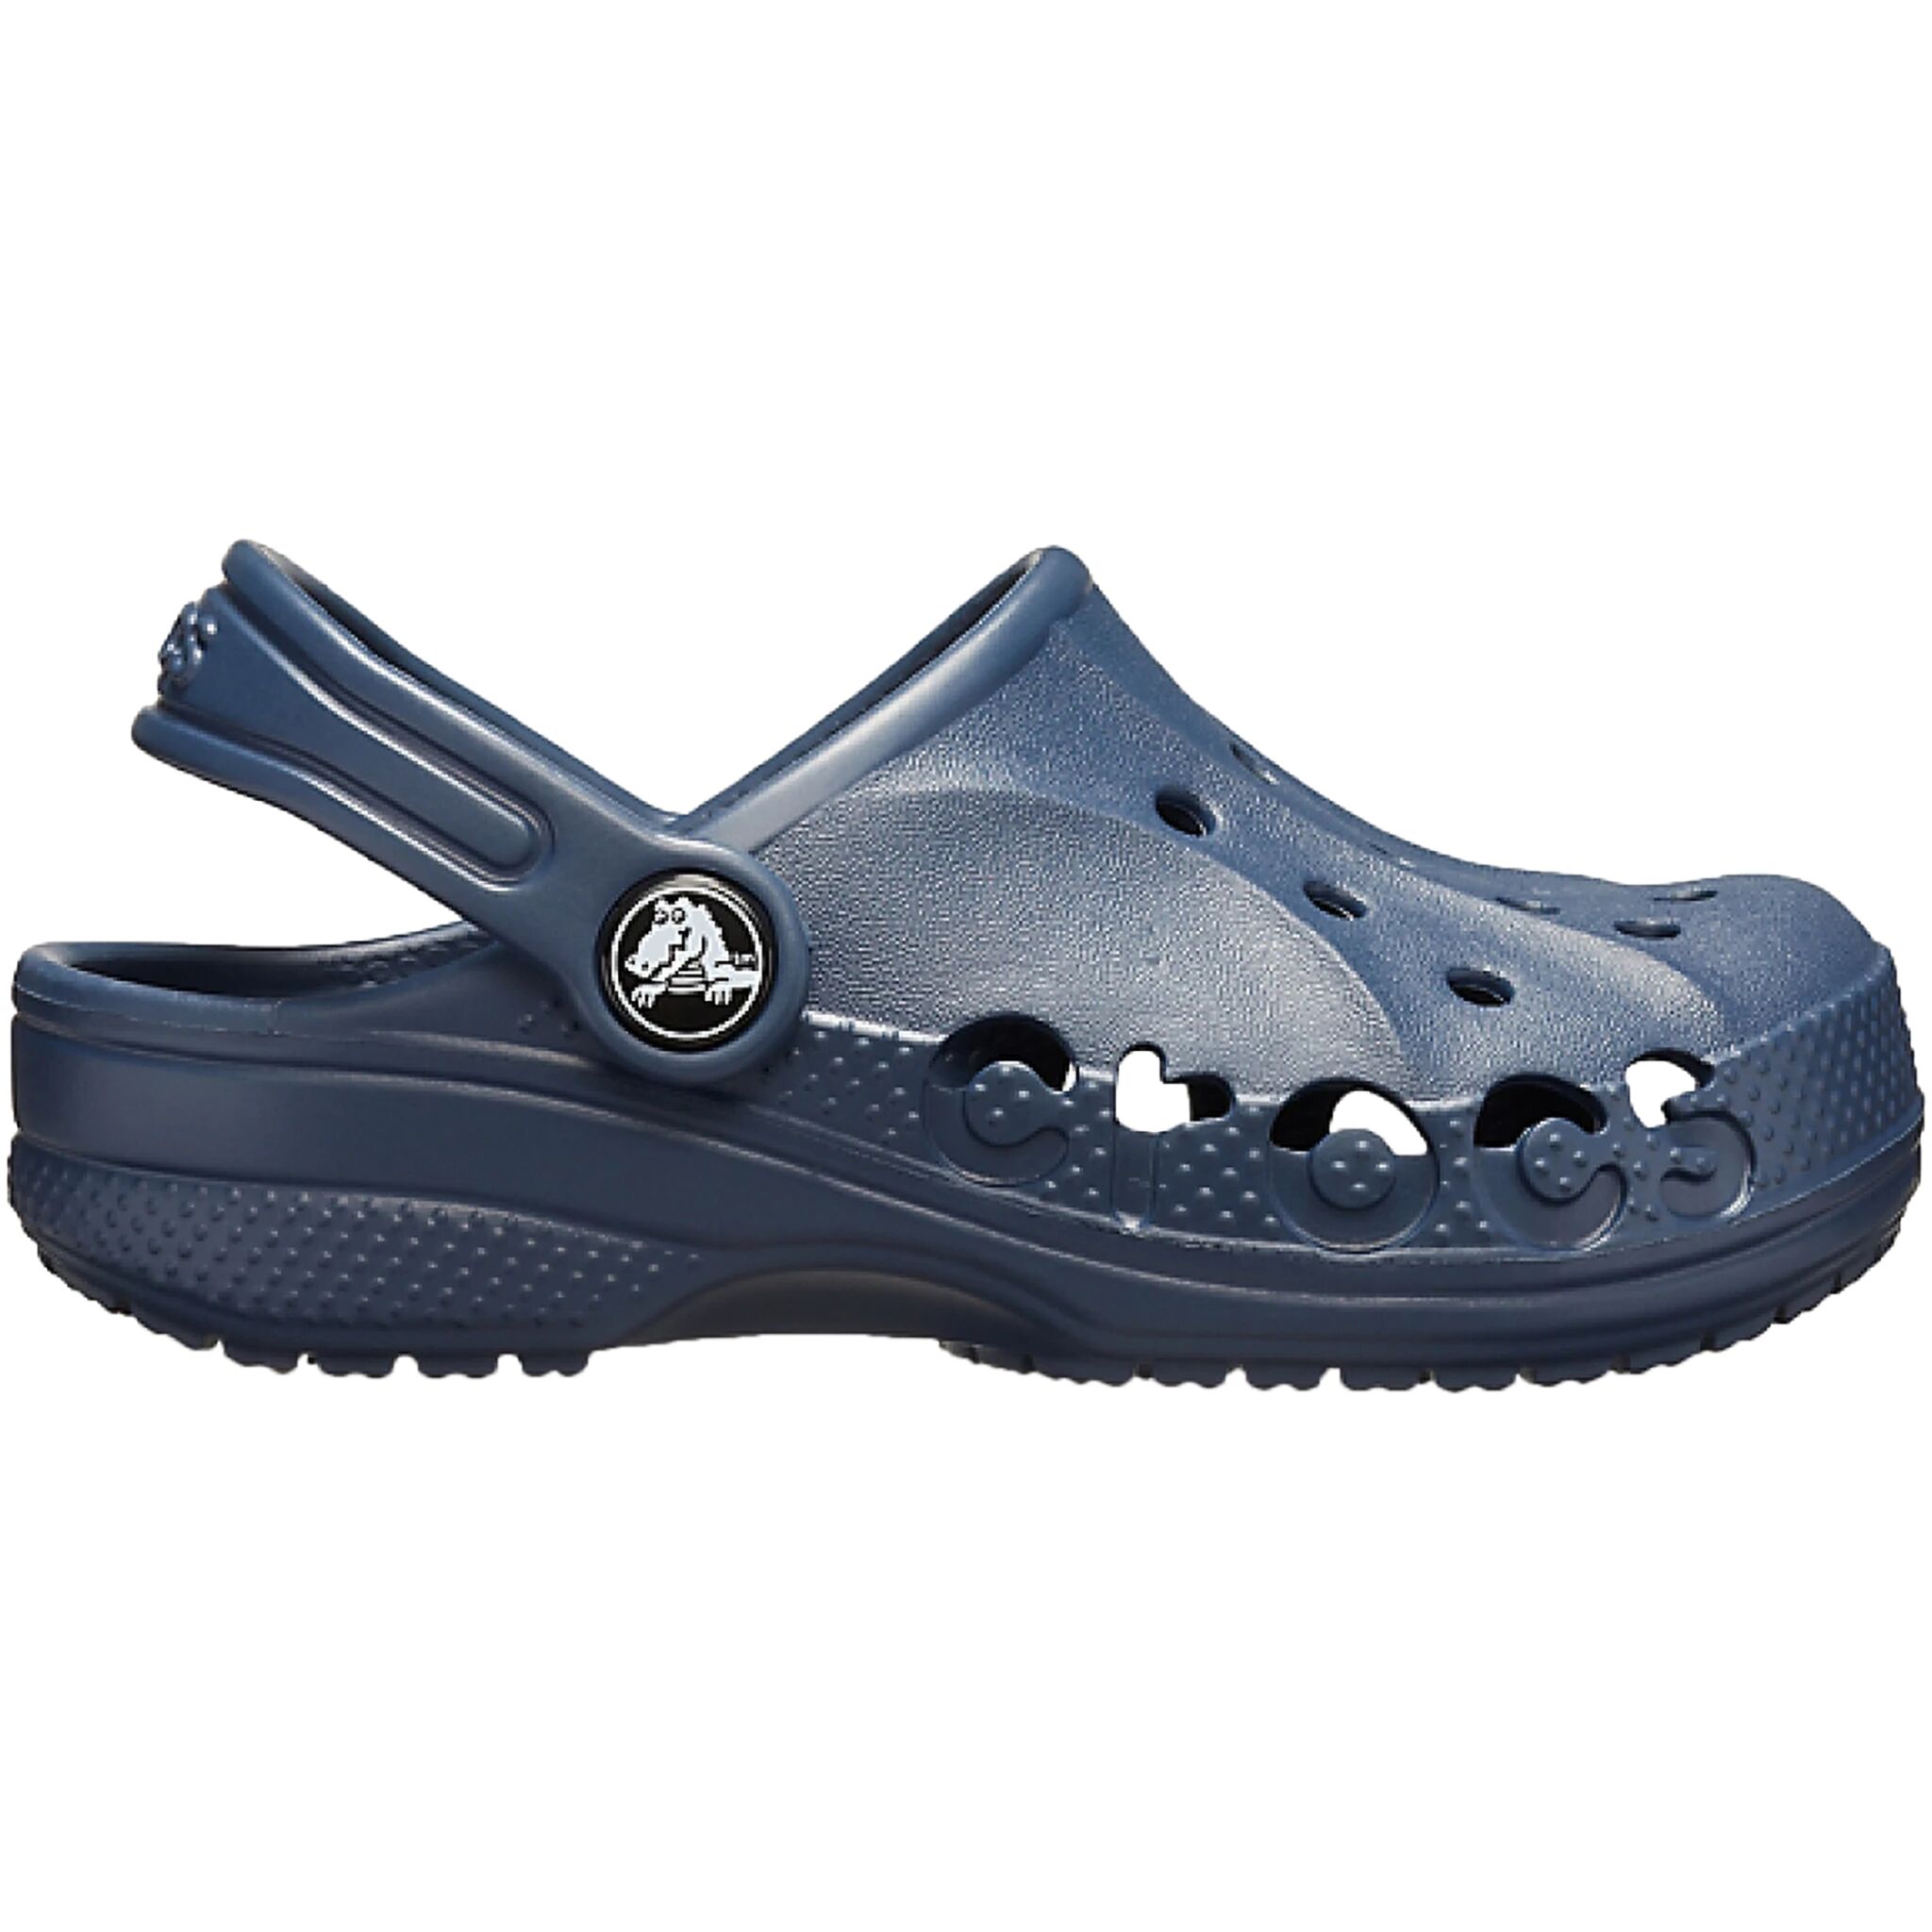 Crocs Baya, sandal barn 32-33 navy